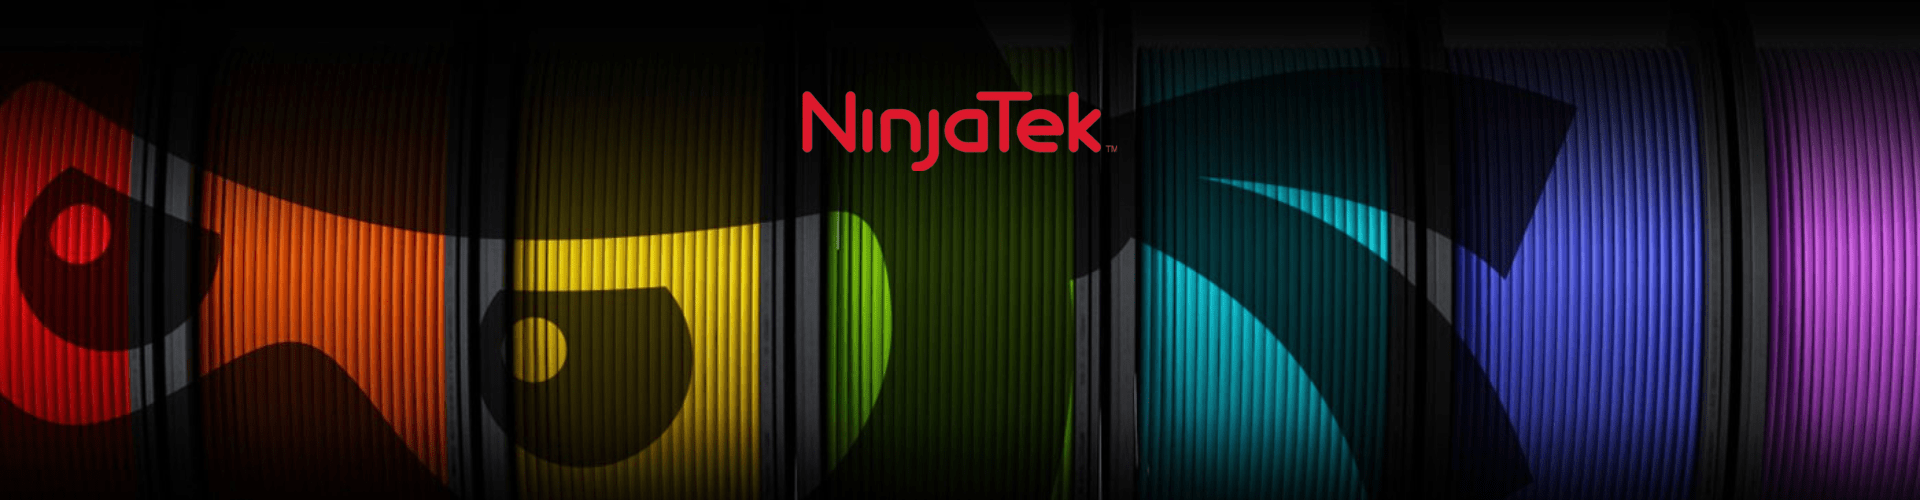 NinjaTek Banner